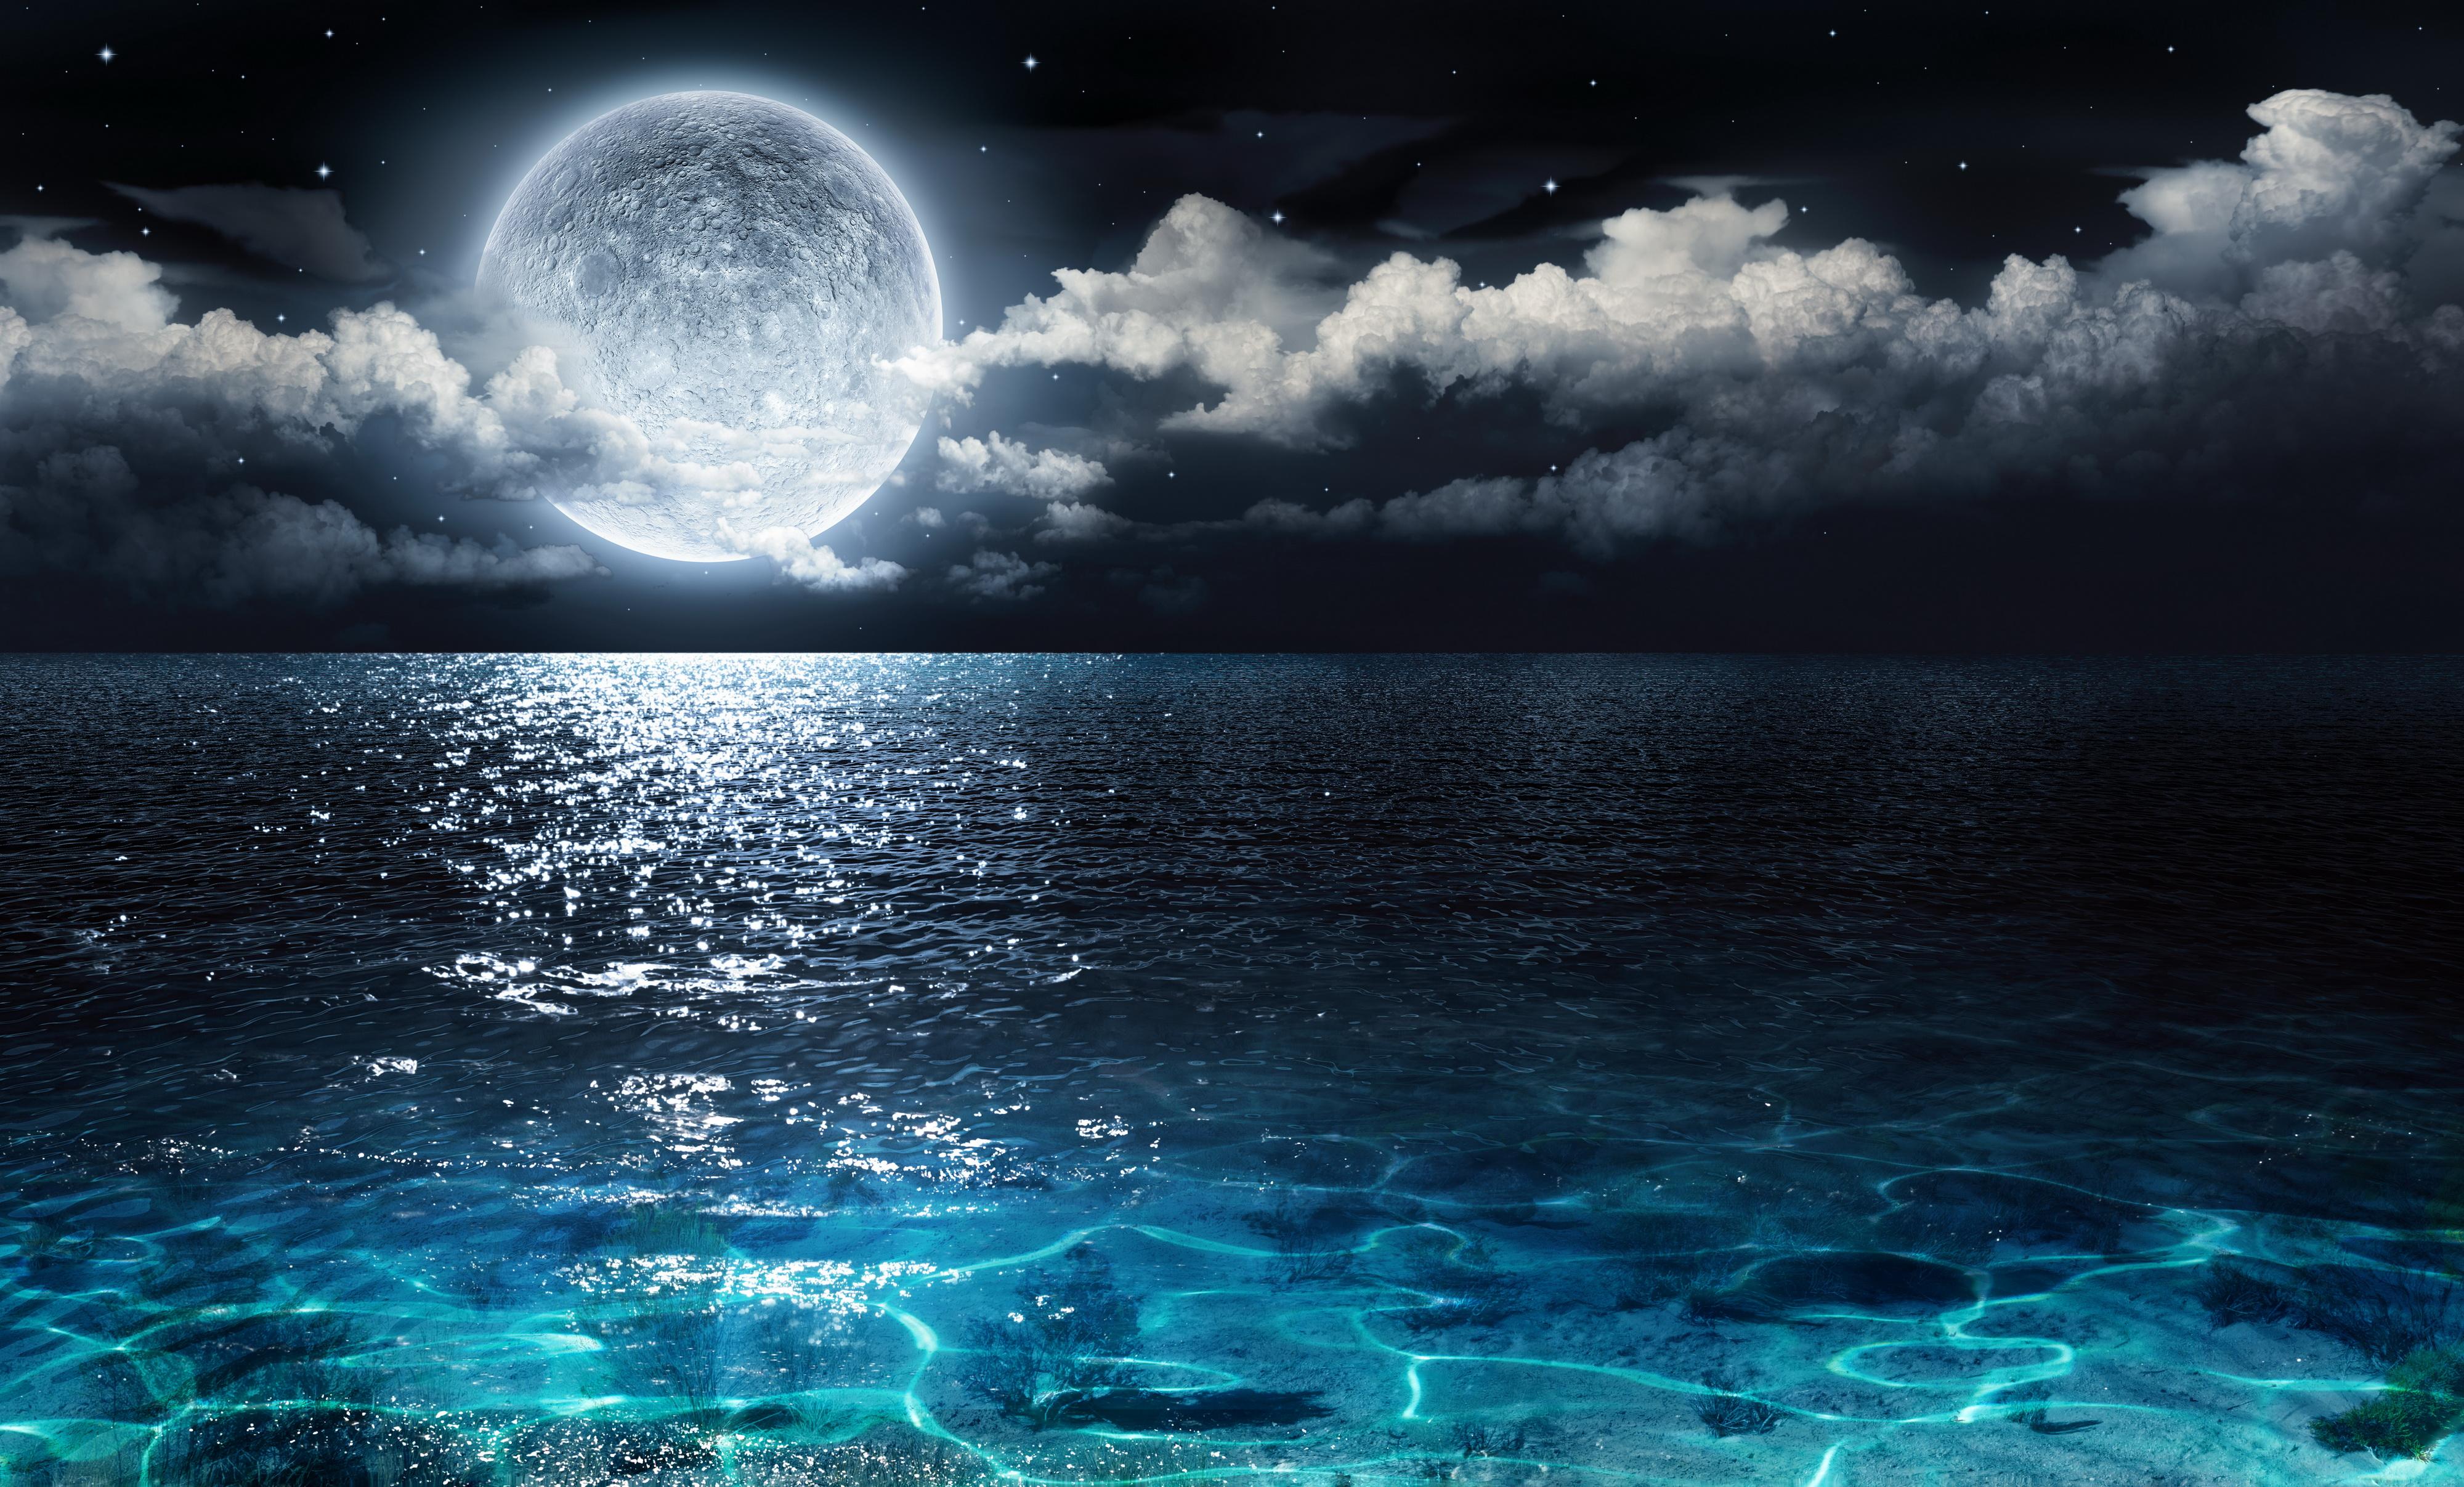 Download Wallpaper sea ocean moon water clouds night sky, 4000x2414